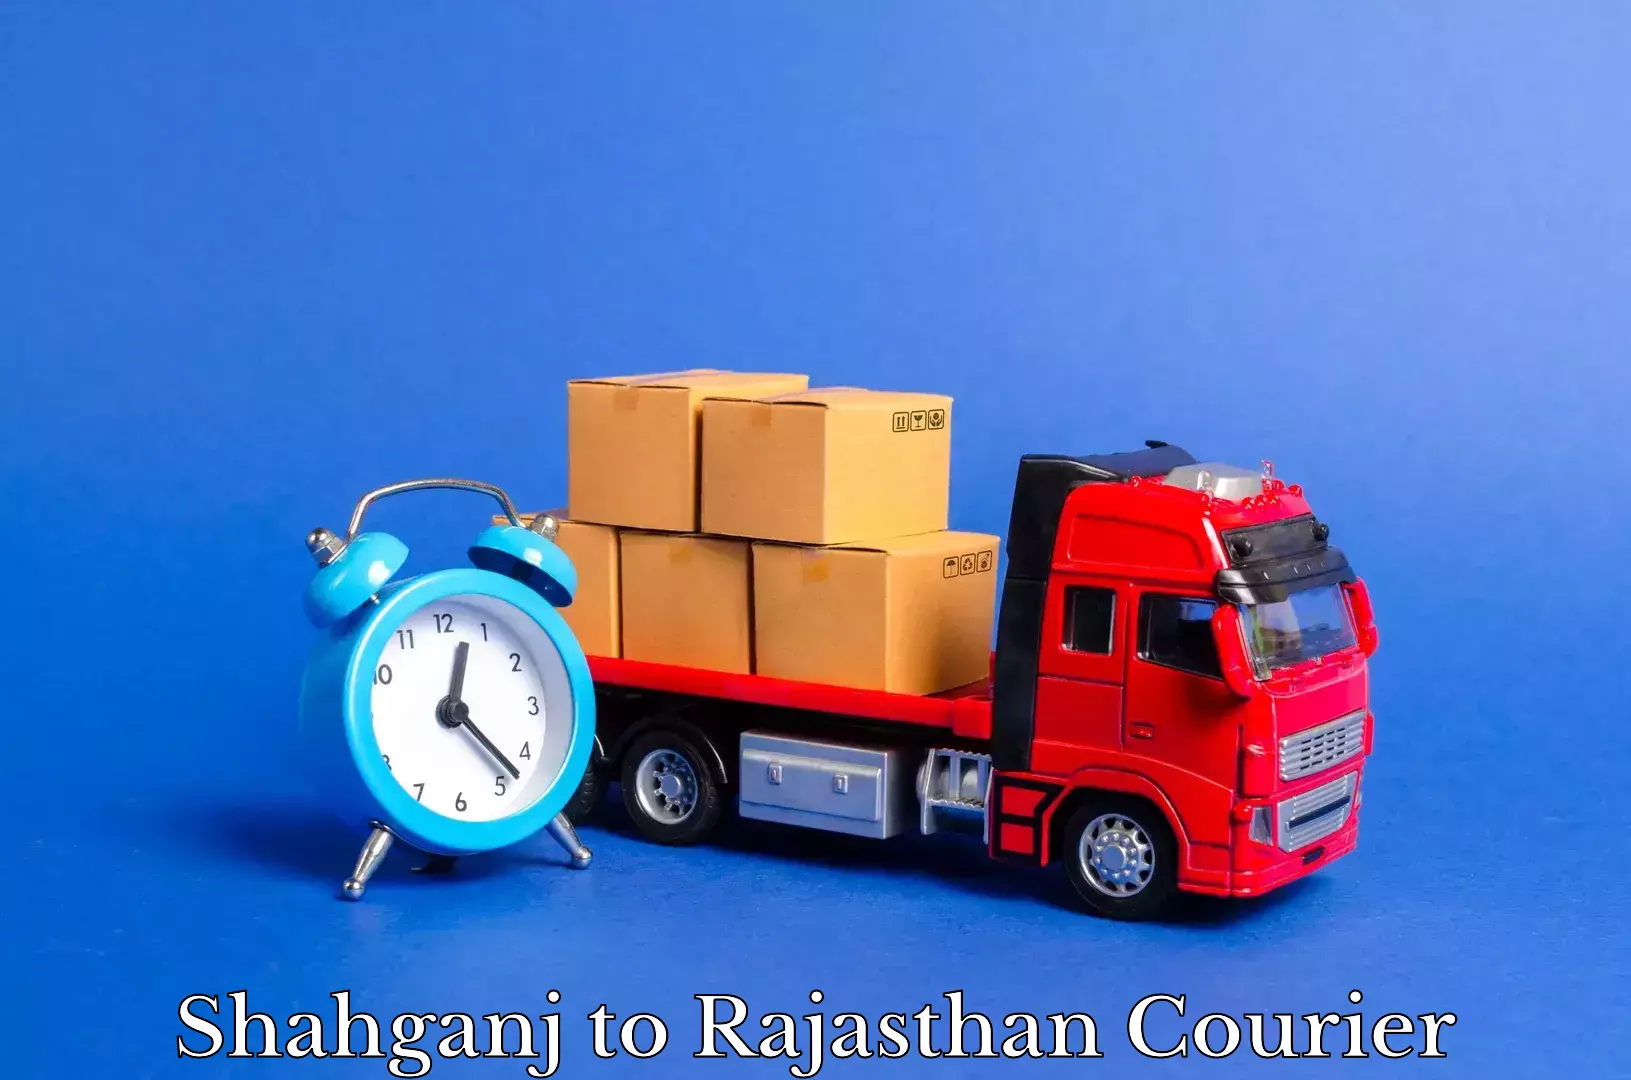 Furniture moving specialists Shahganj to Jodhpur